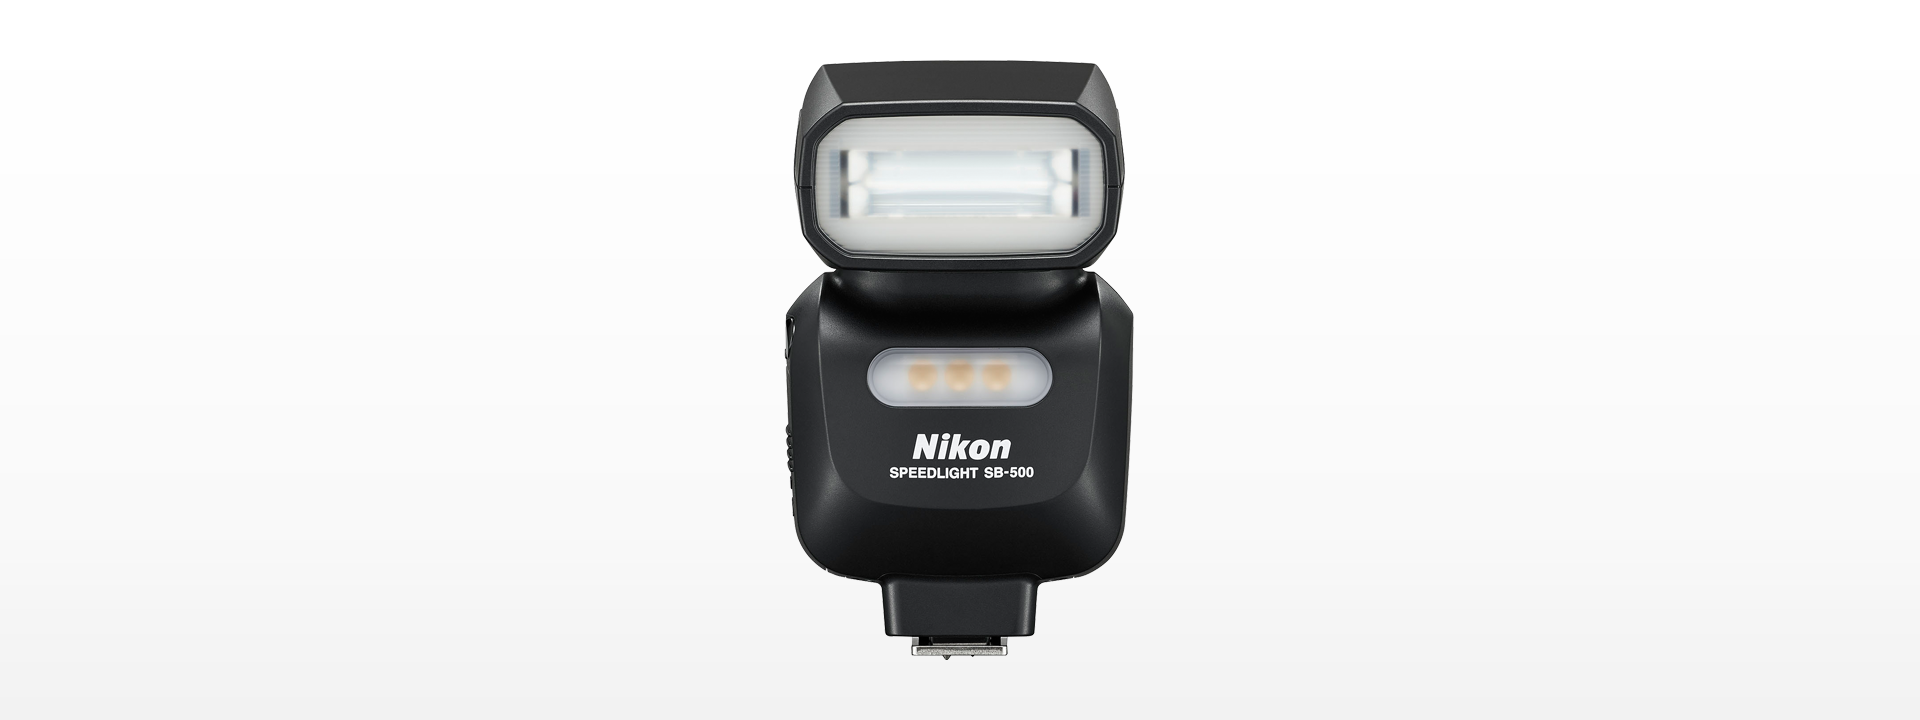 Nikon スピードライトSB-500 電池入